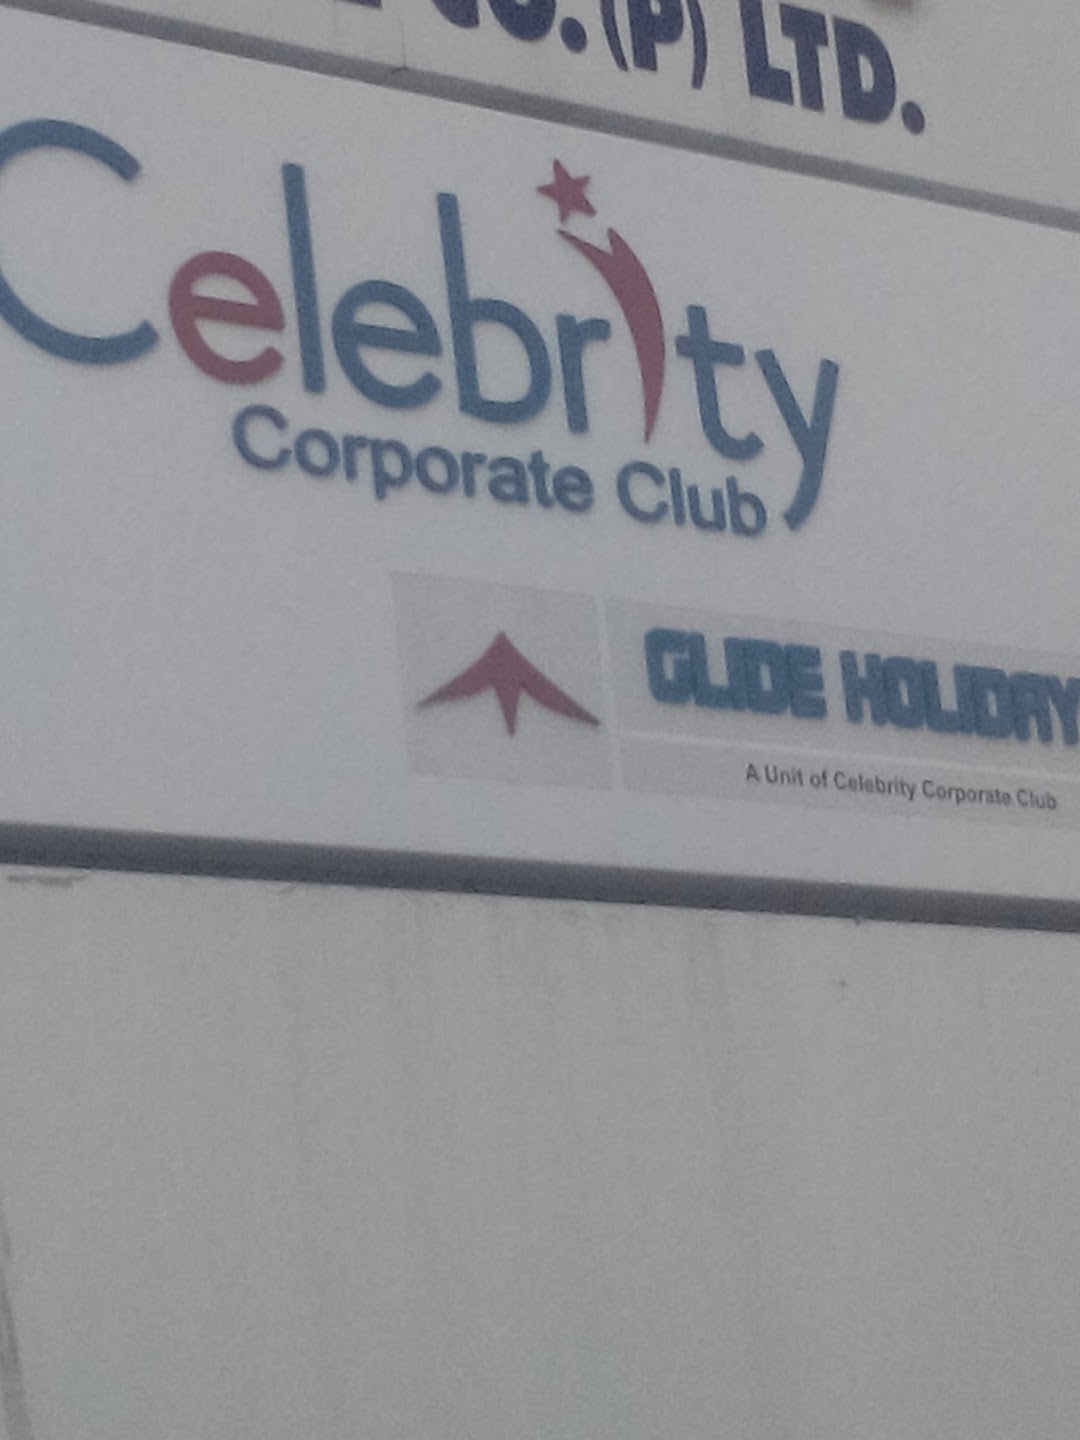 Celebrity Corporate Club-Glide Holidays